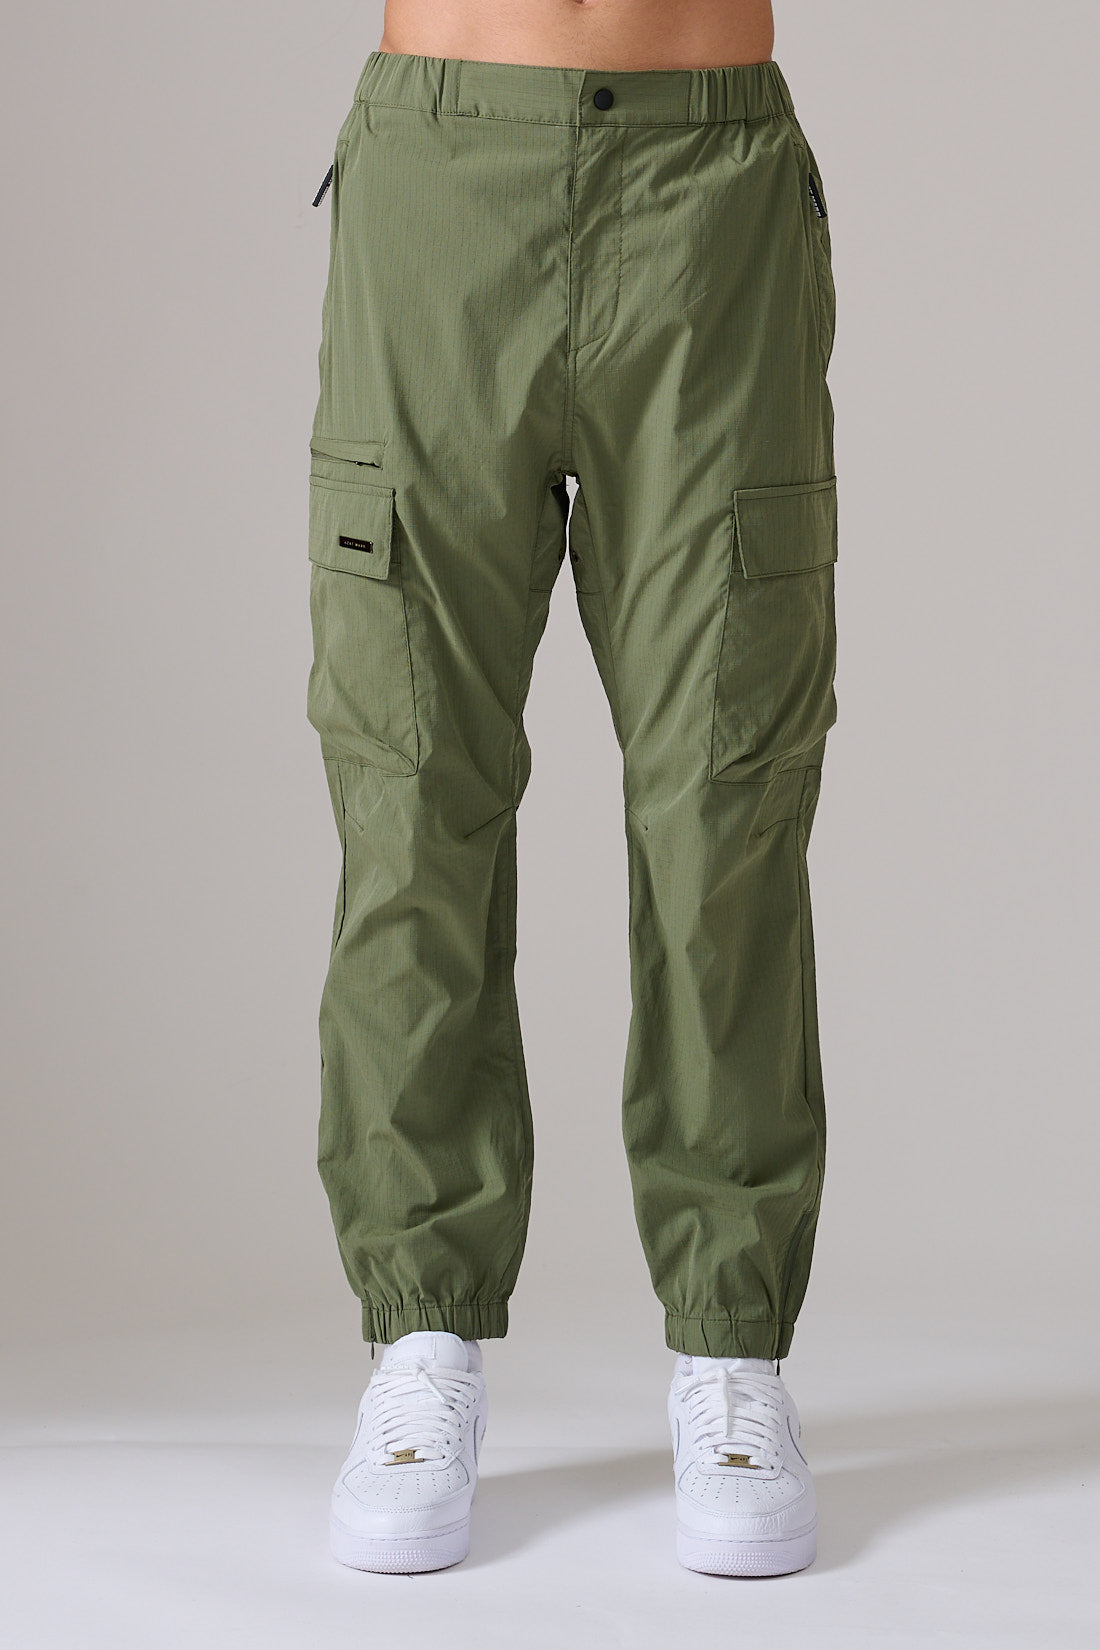 Y-3 Winter Ripstop Pants - Green